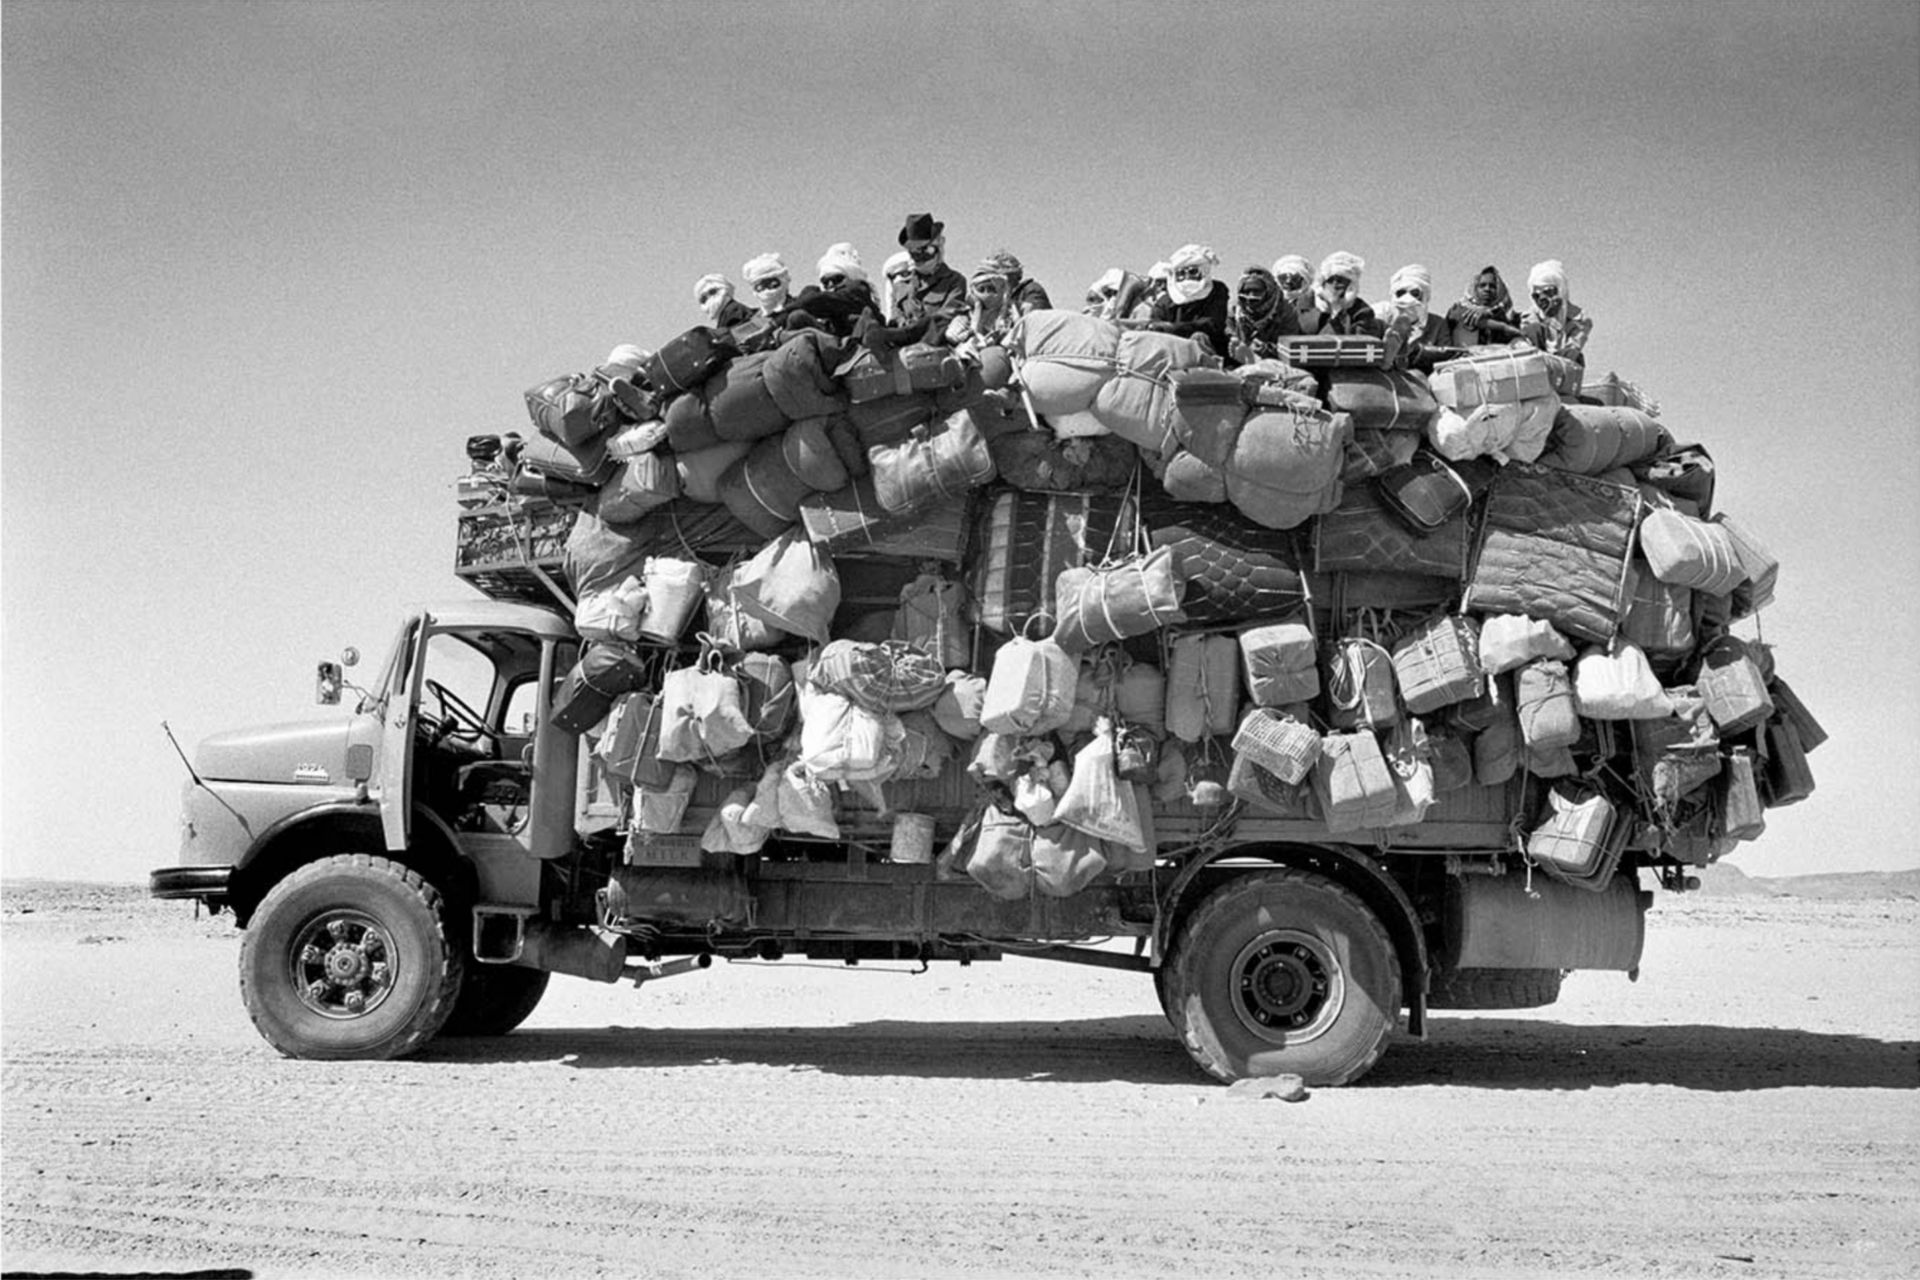 Raymond Depardon "Between Chad and Libya, 1978" Photo Print